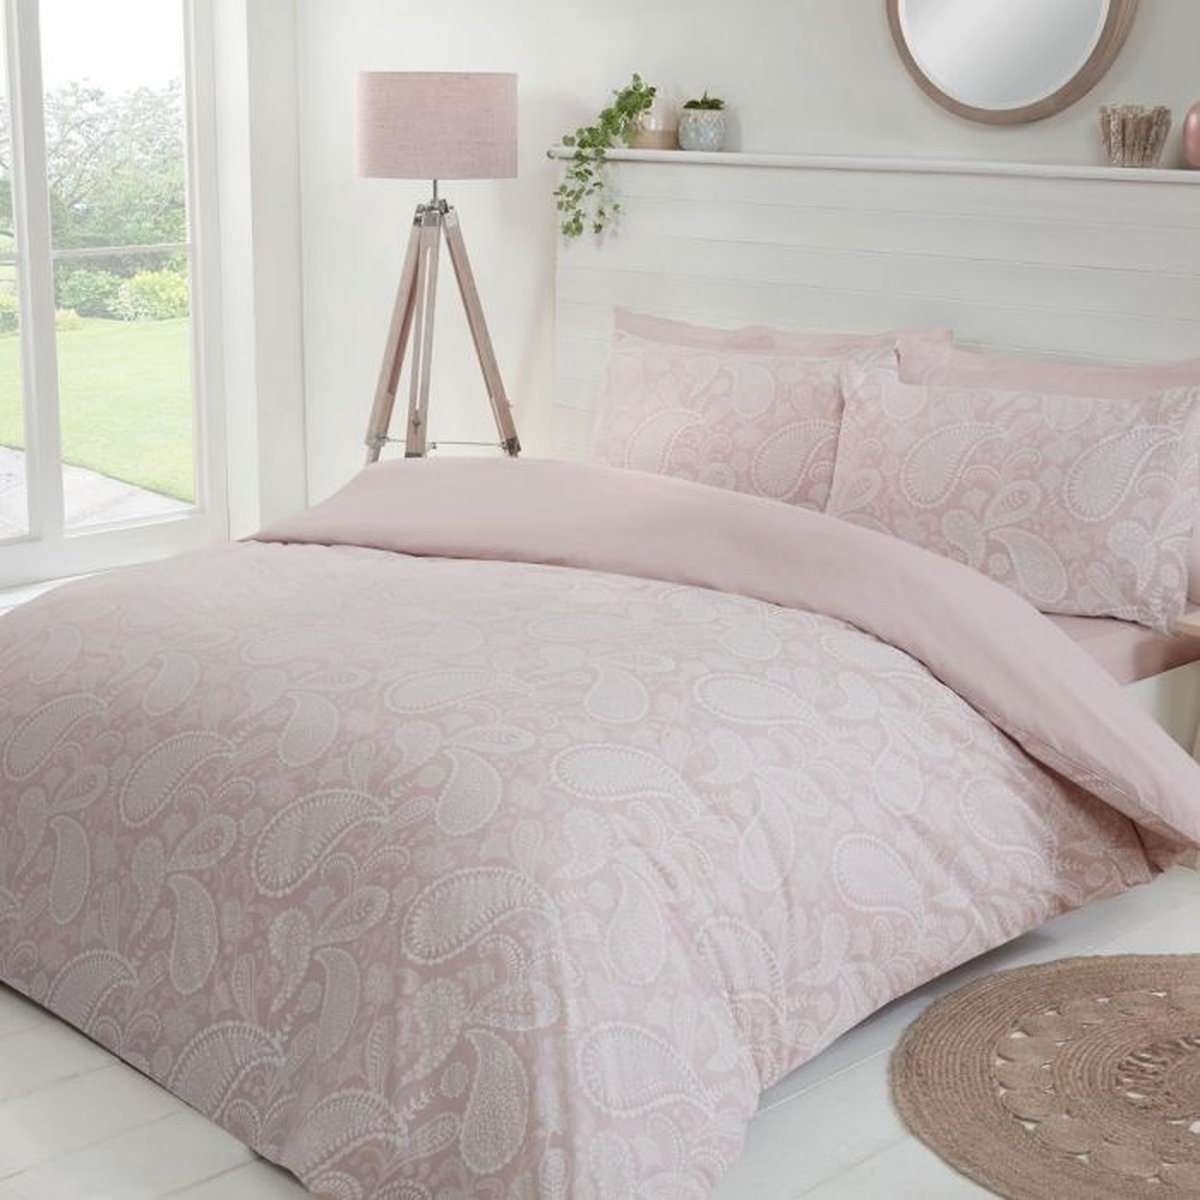 Sleepdown dekbedovertrek Paisley paste blush pink 200x200 + 50x75 / 2-persoons